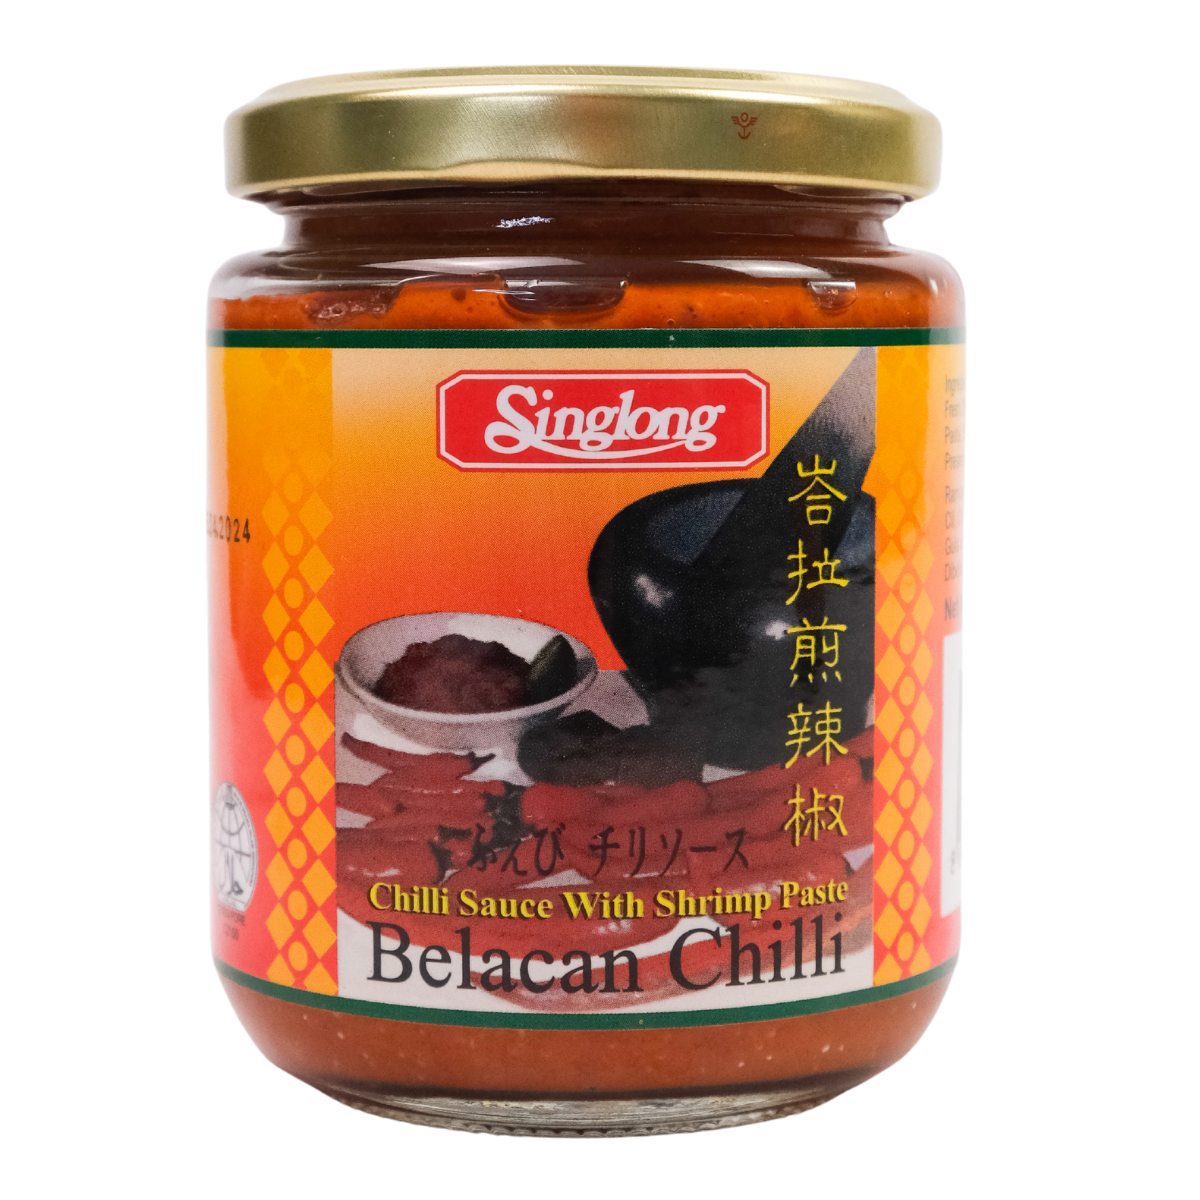 Singlong Belacan Chilli Sauce with Shrimp Paste 250g (BB: 05.04.24)